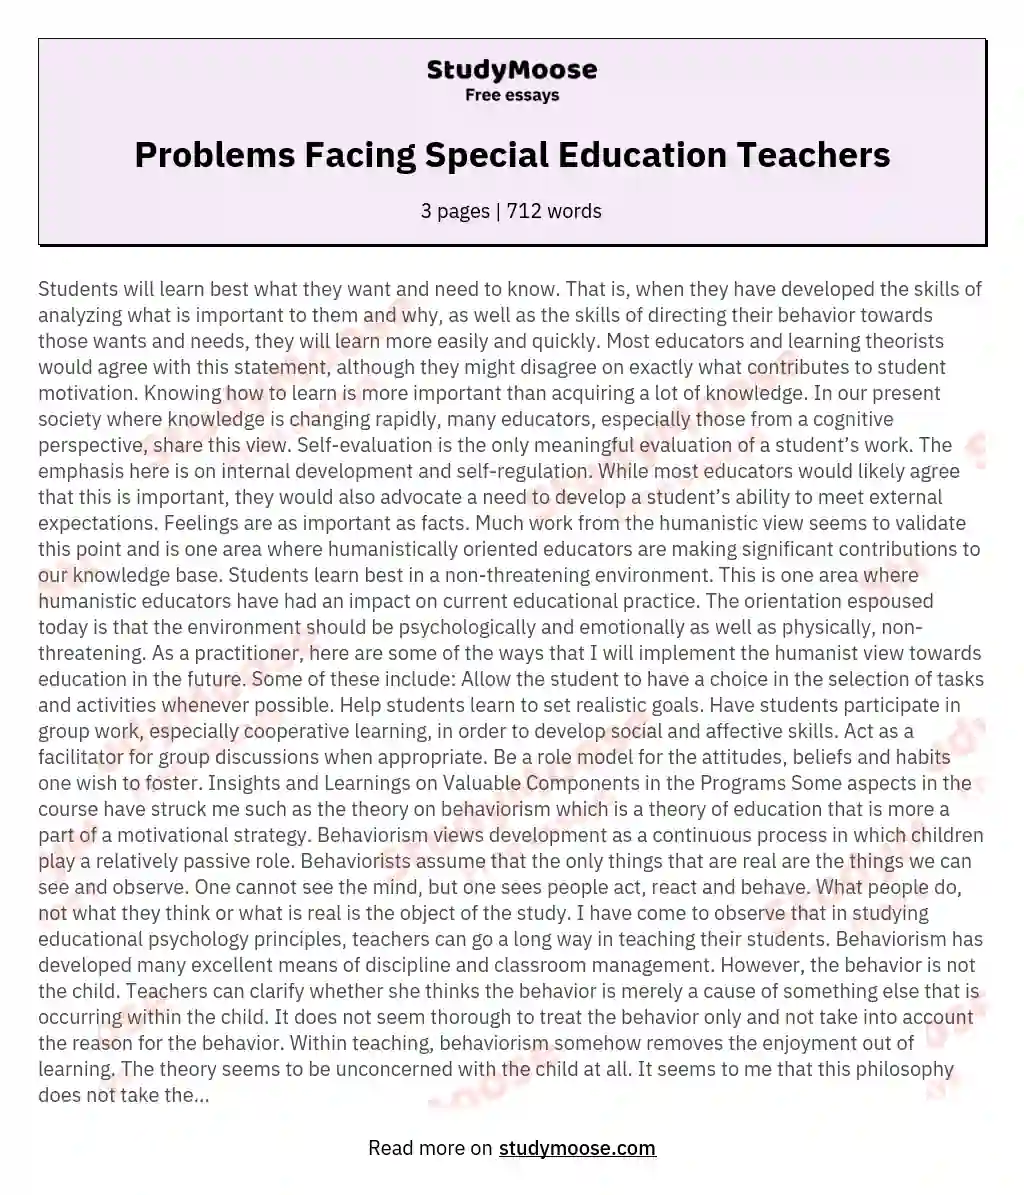 Problems Facing Special Education Teachers essay